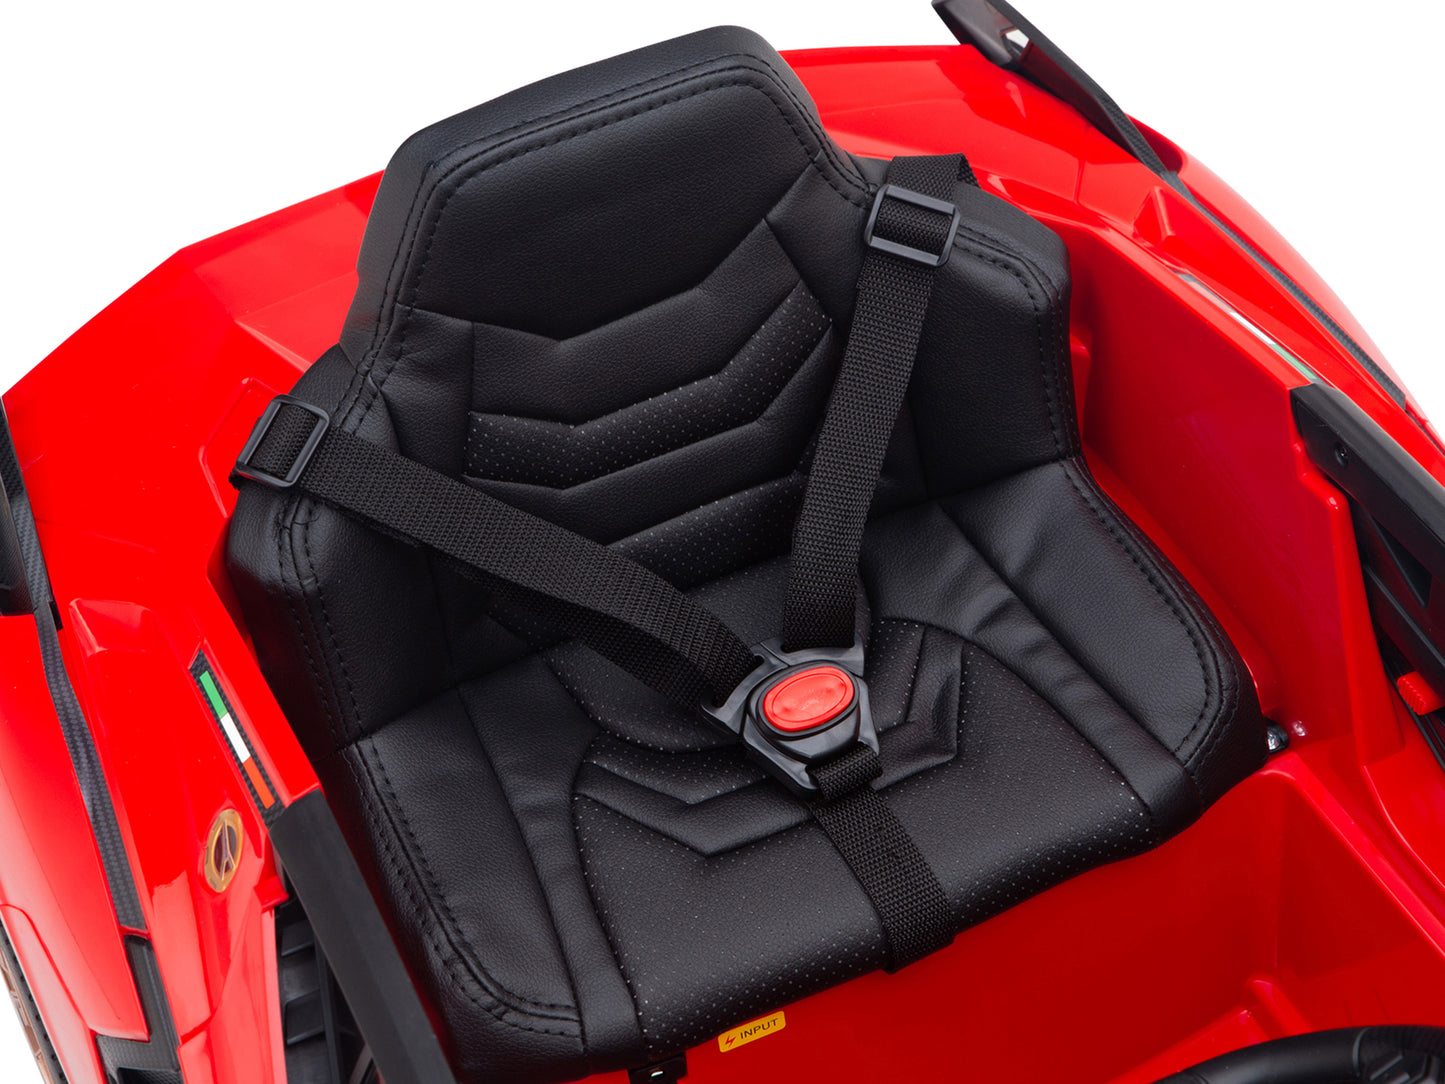 Lamborghini Sian 12V Kids Ride On Car with Remote Control - Red